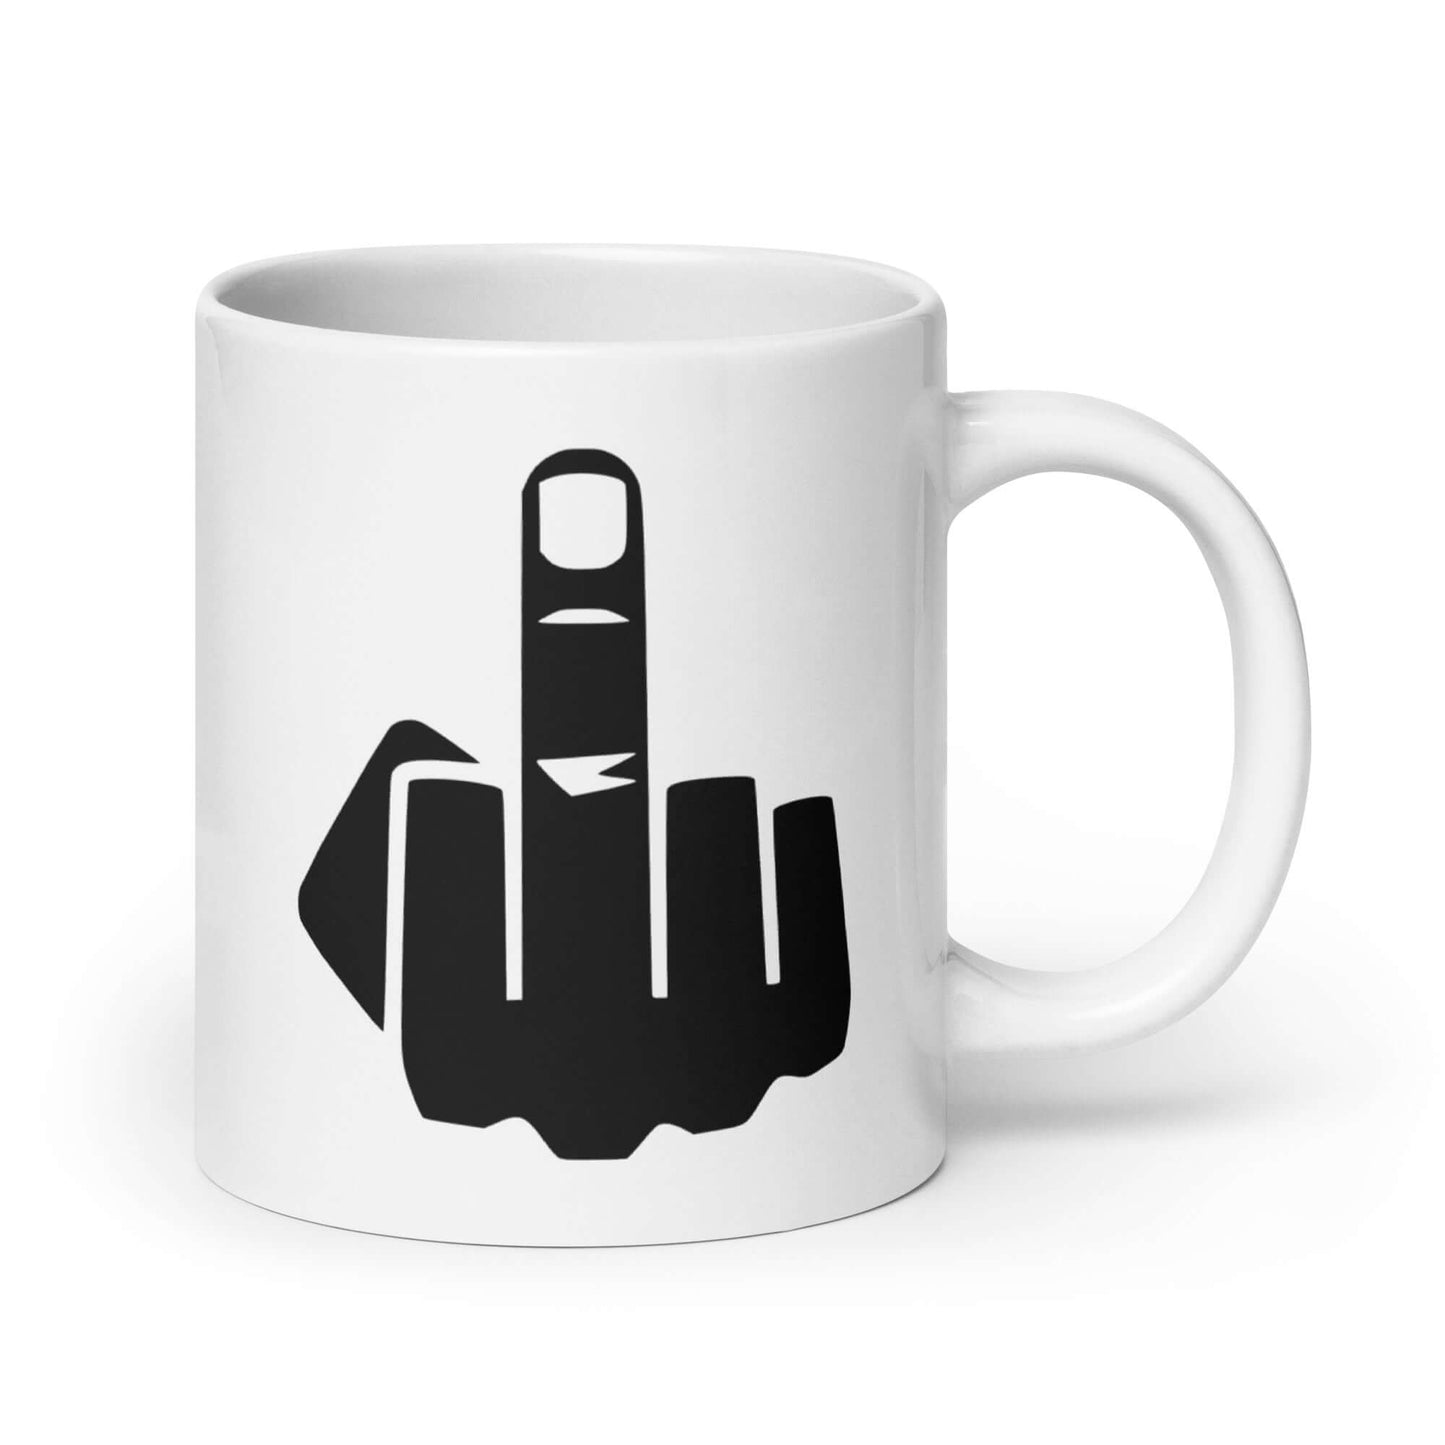 Middle finger flip the bird ceramic mug